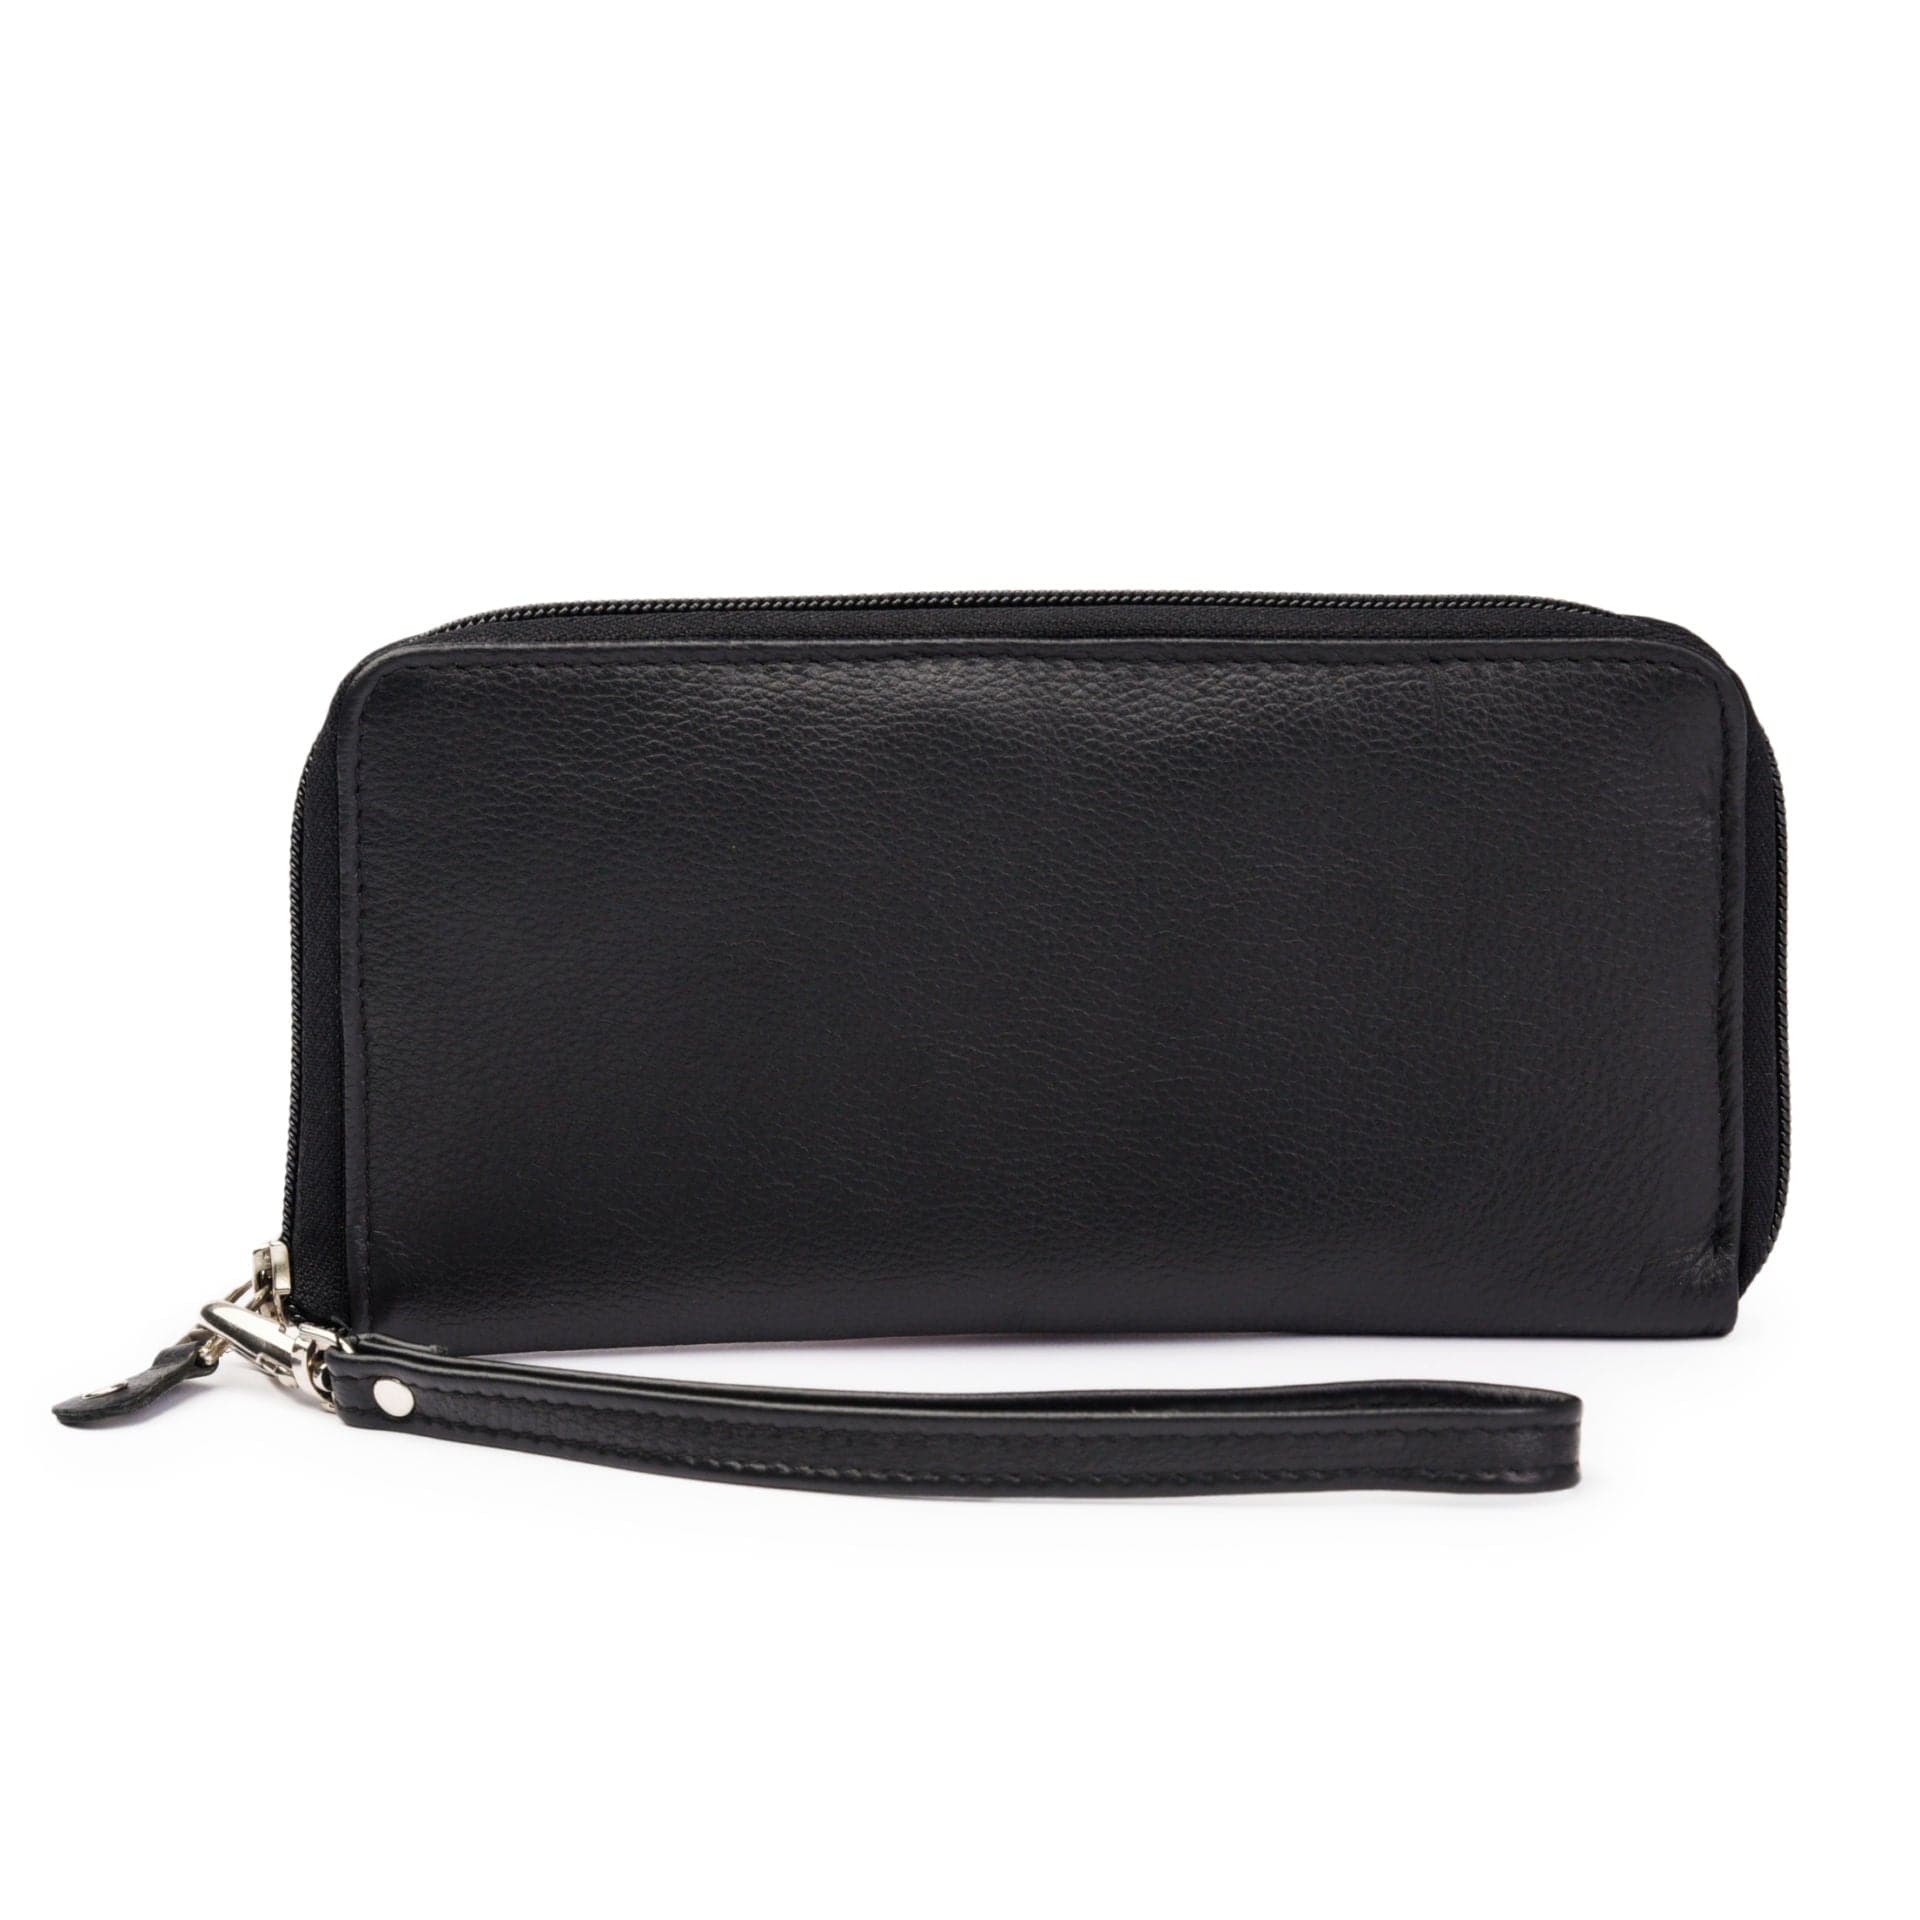 Leather Zip Around Wallet - Black